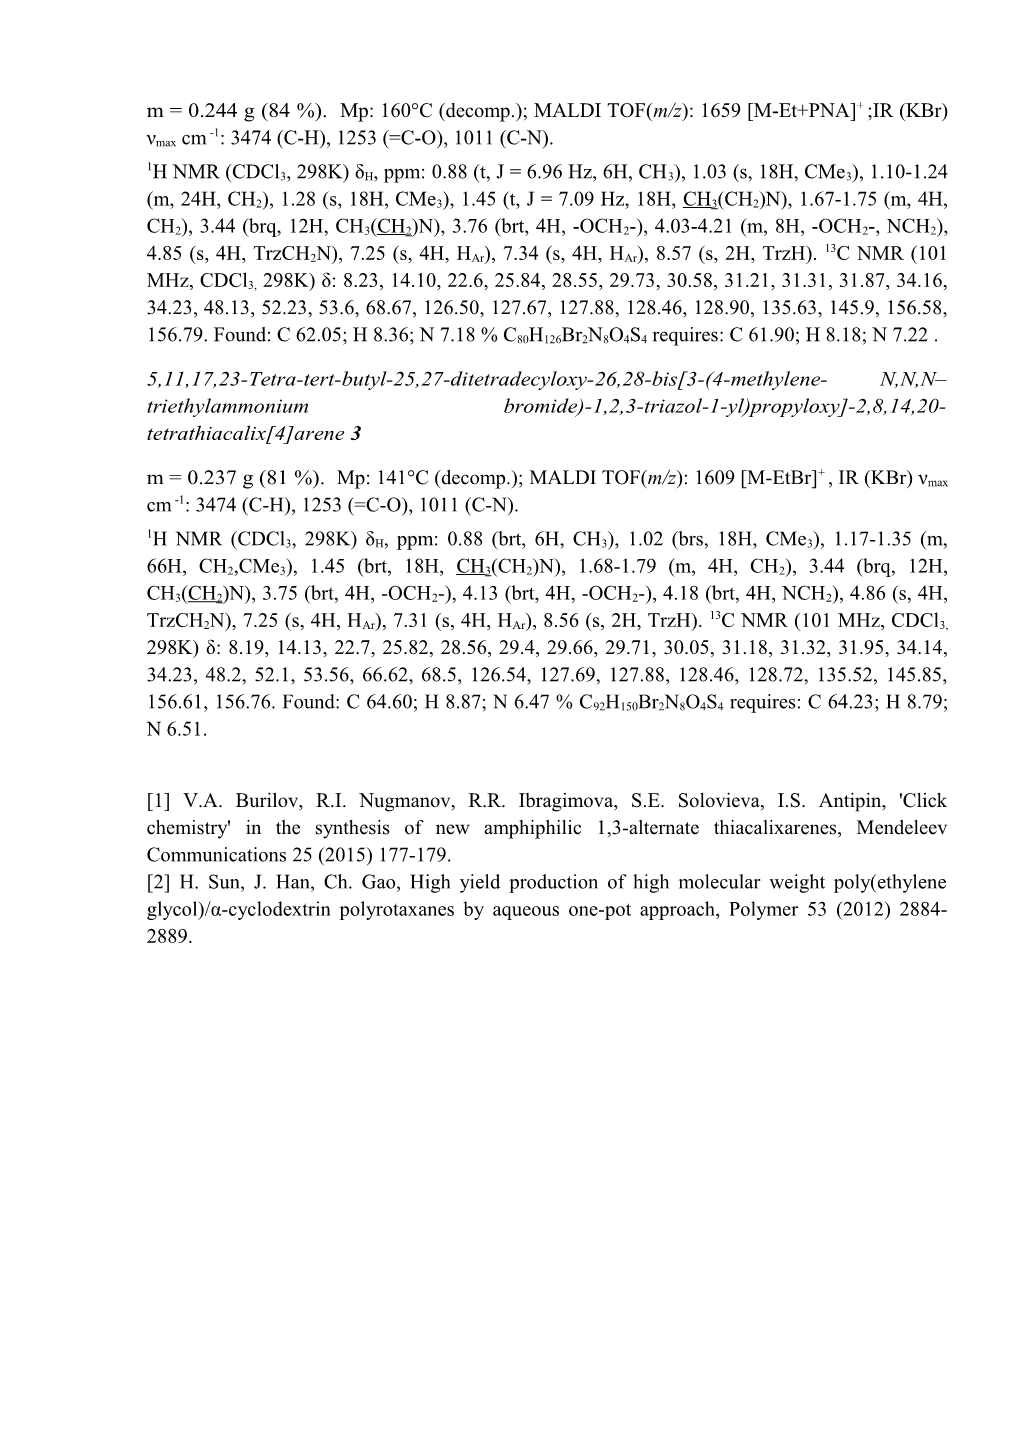 Interactions of New Bis-Ammonium Thiacalix 4 Arene Derivatives in 1,3-Alternatestereoisomeric